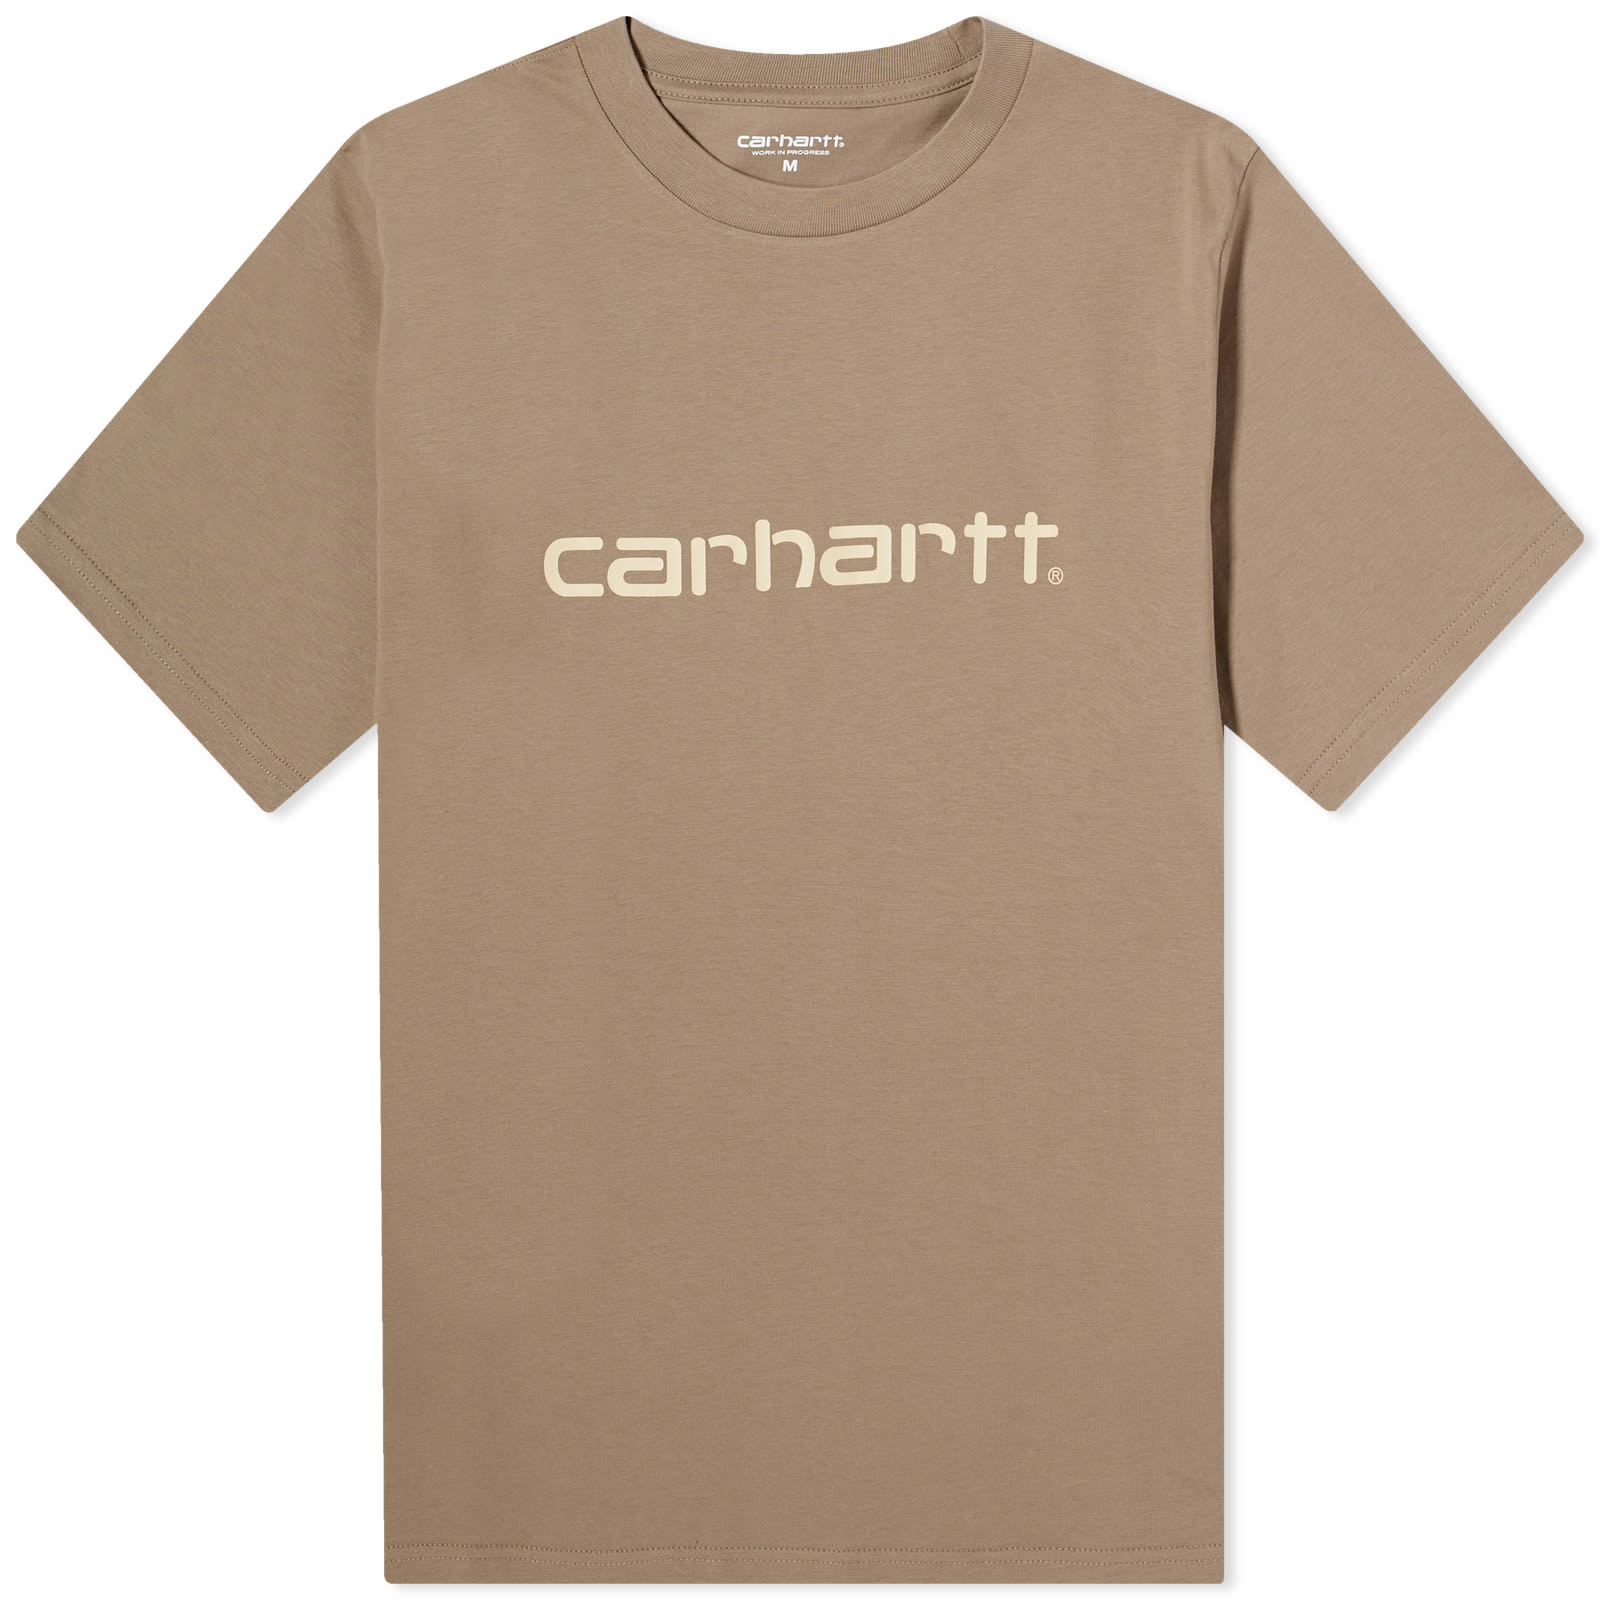 Футболка Carhartt Wip Script, светло-коричневый футболка carhartt wip script embroidery белый